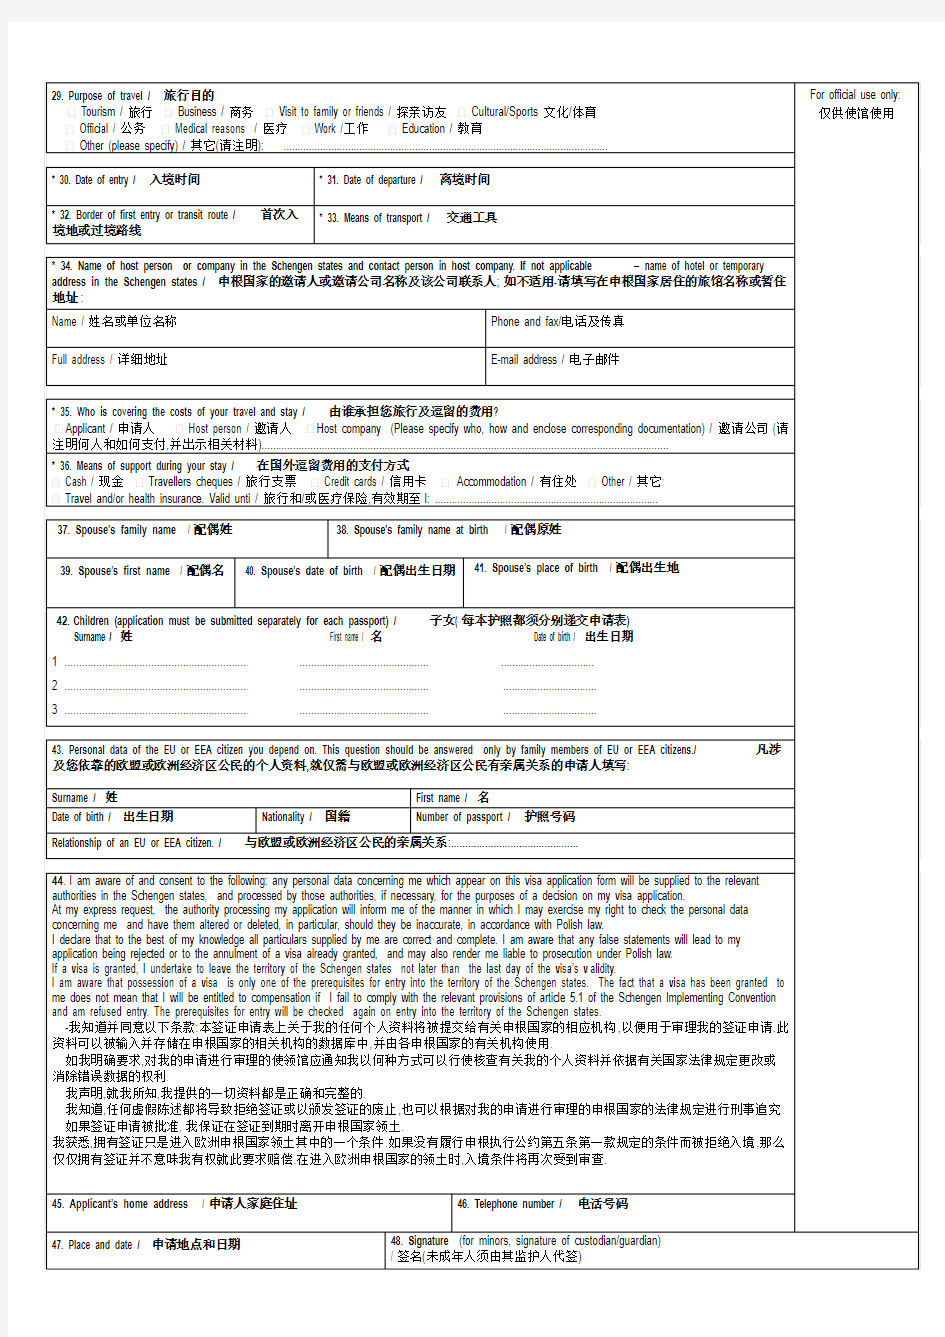 Visa application form EN and CN(申根国签证申请表中英文对照)